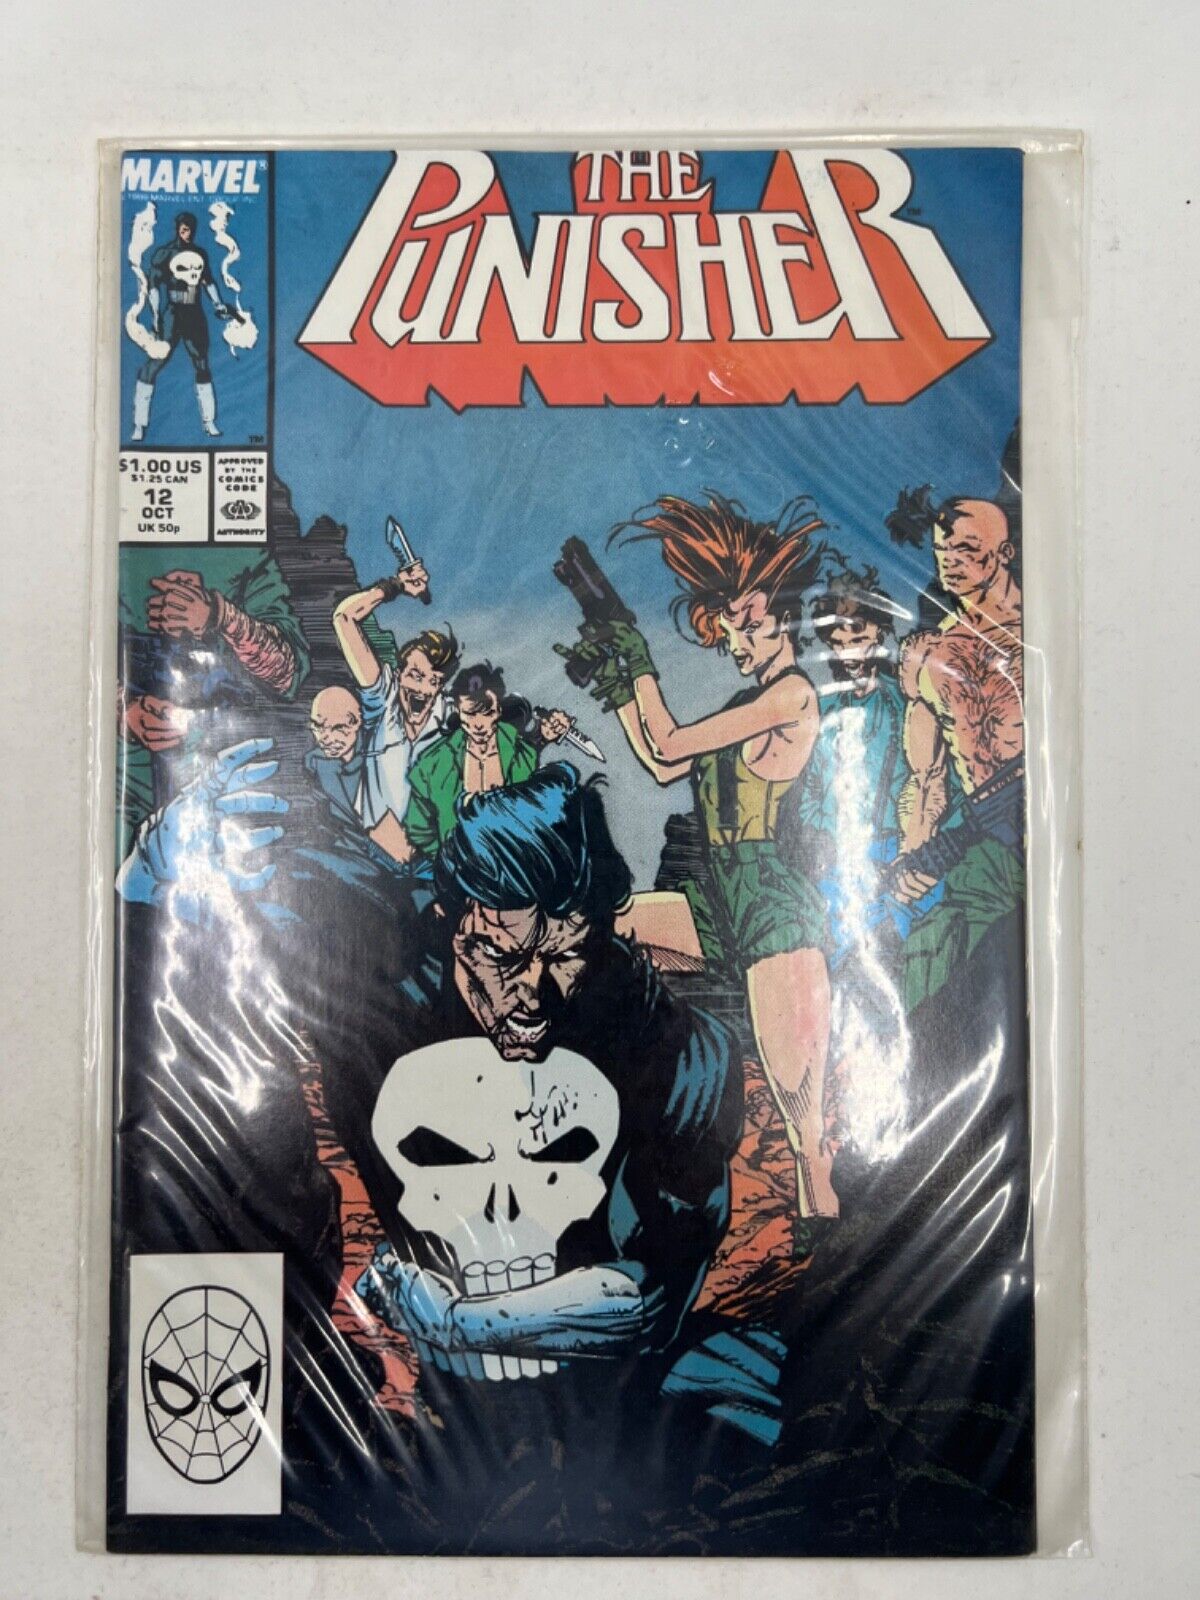 Marvel Comics The Punisher #12 1988